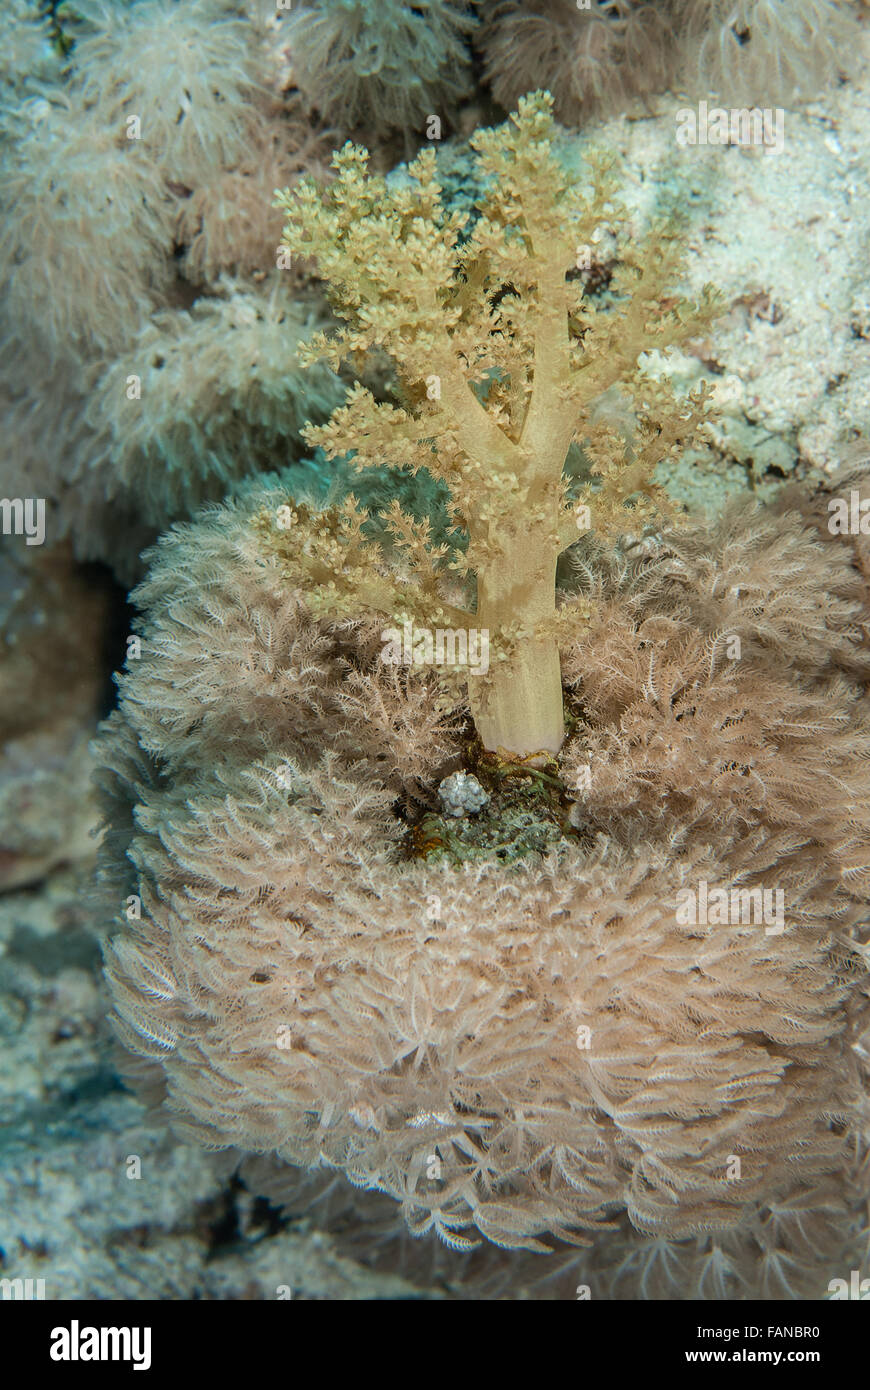 Litophyton arboreum (Broccoli coral),  Nephtheidae, Sharm el Sheikh, Red Sea, Egypt Stock Photo